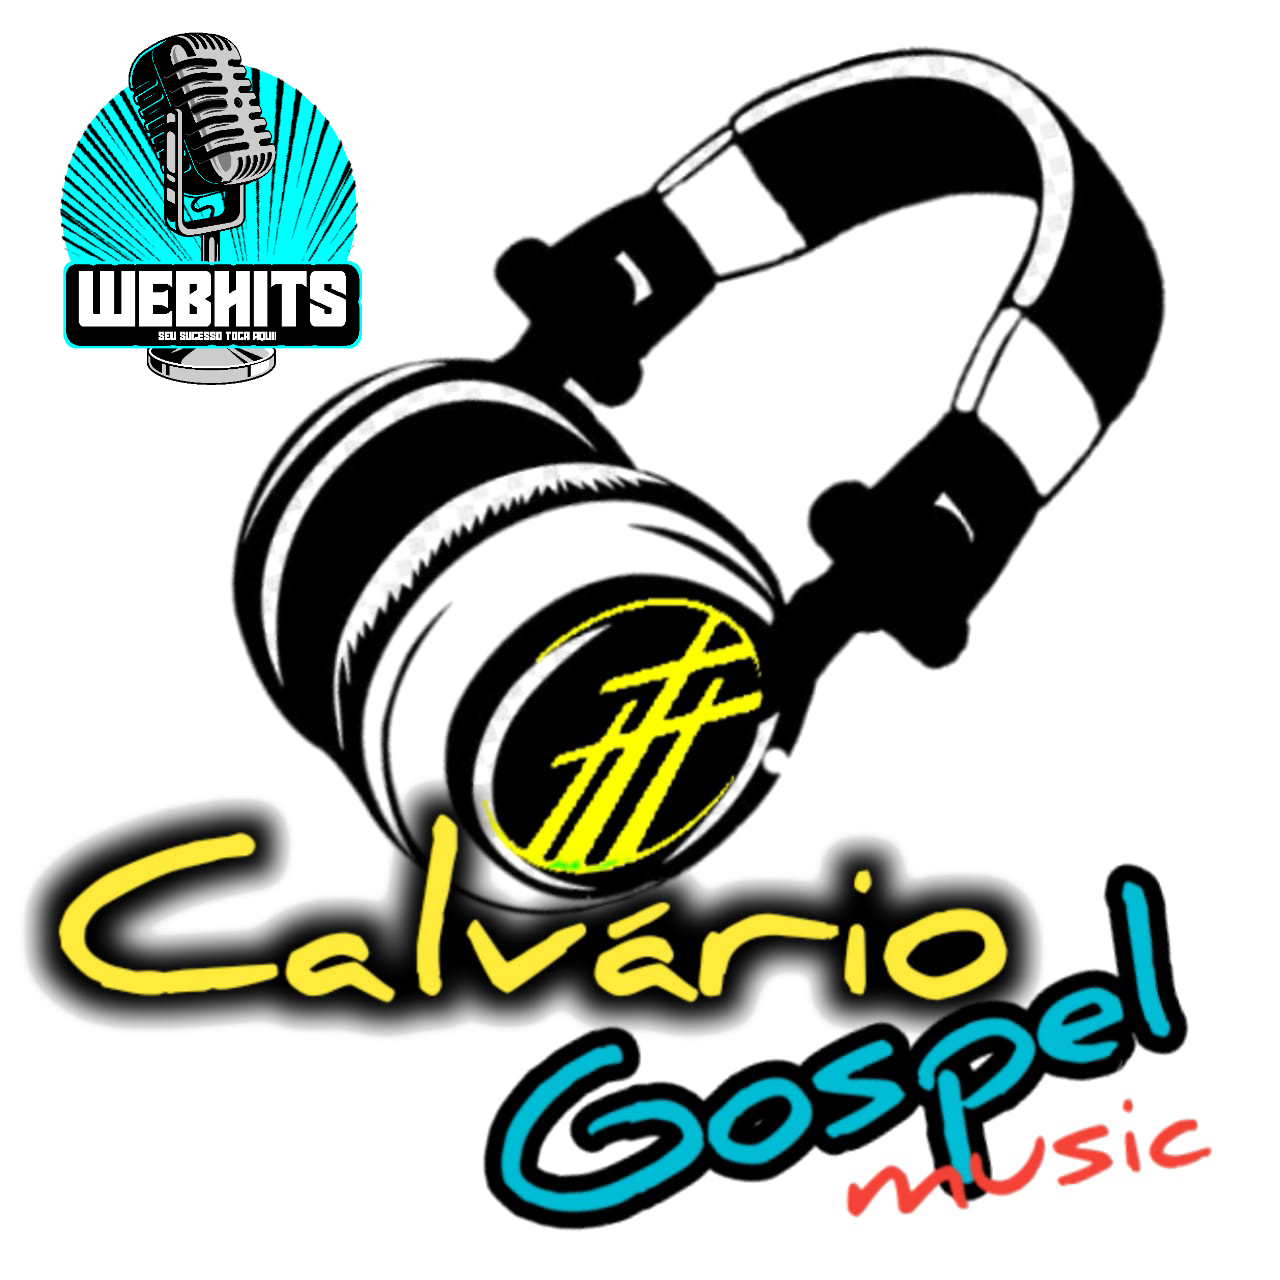 CALVARIO GOSPEL MUSIC aaa